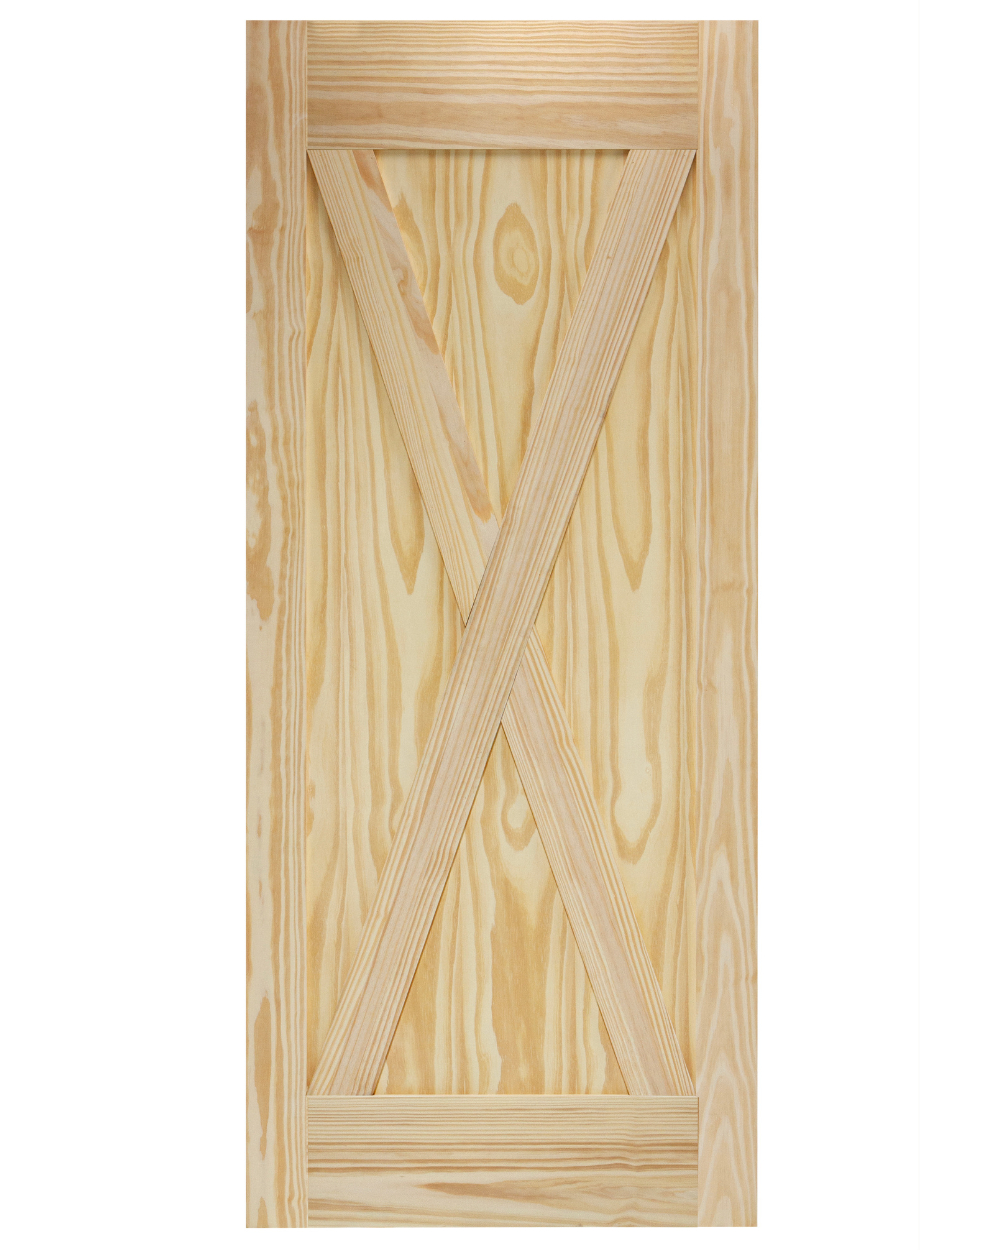 XL Framed X brace Barn Door